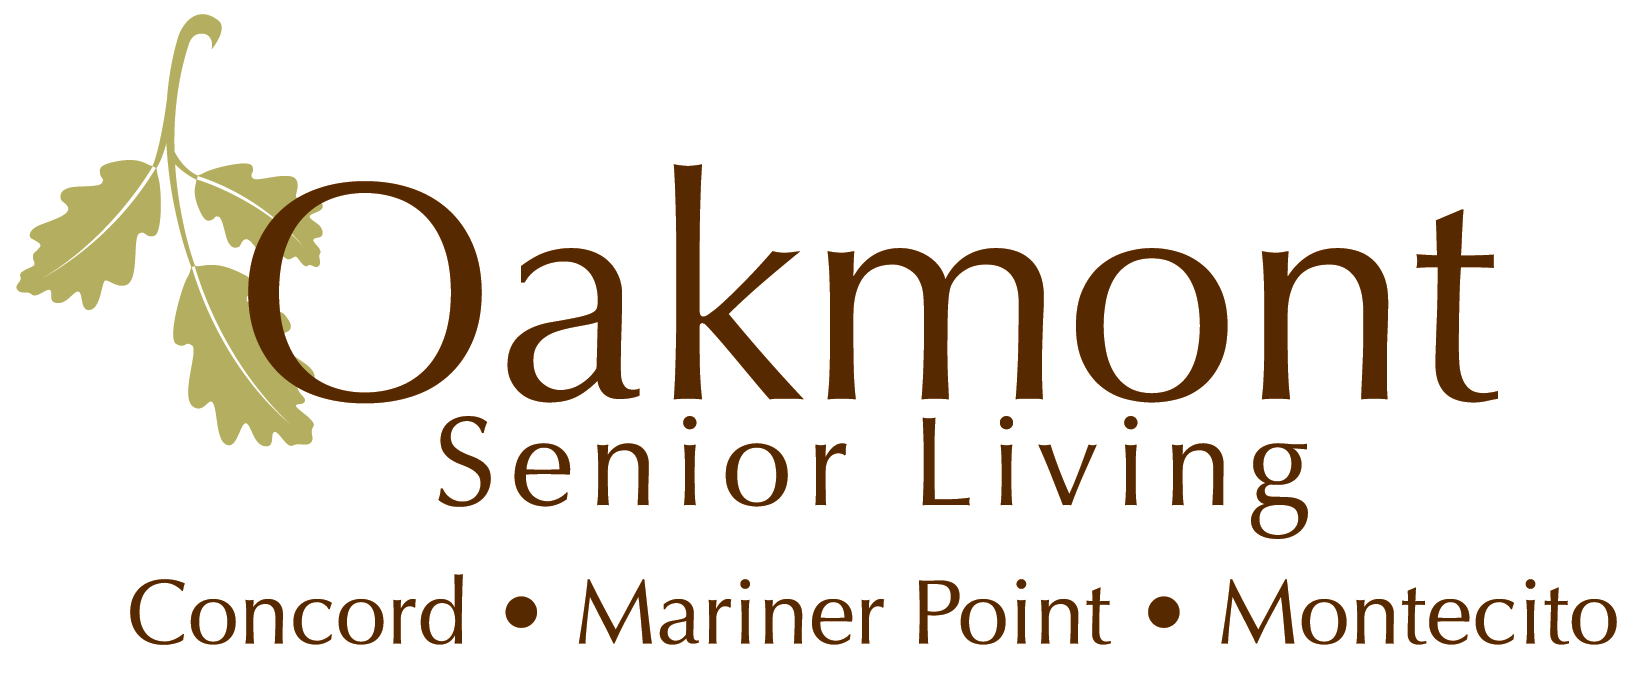 E. Oakmont Senior Living (Oro)